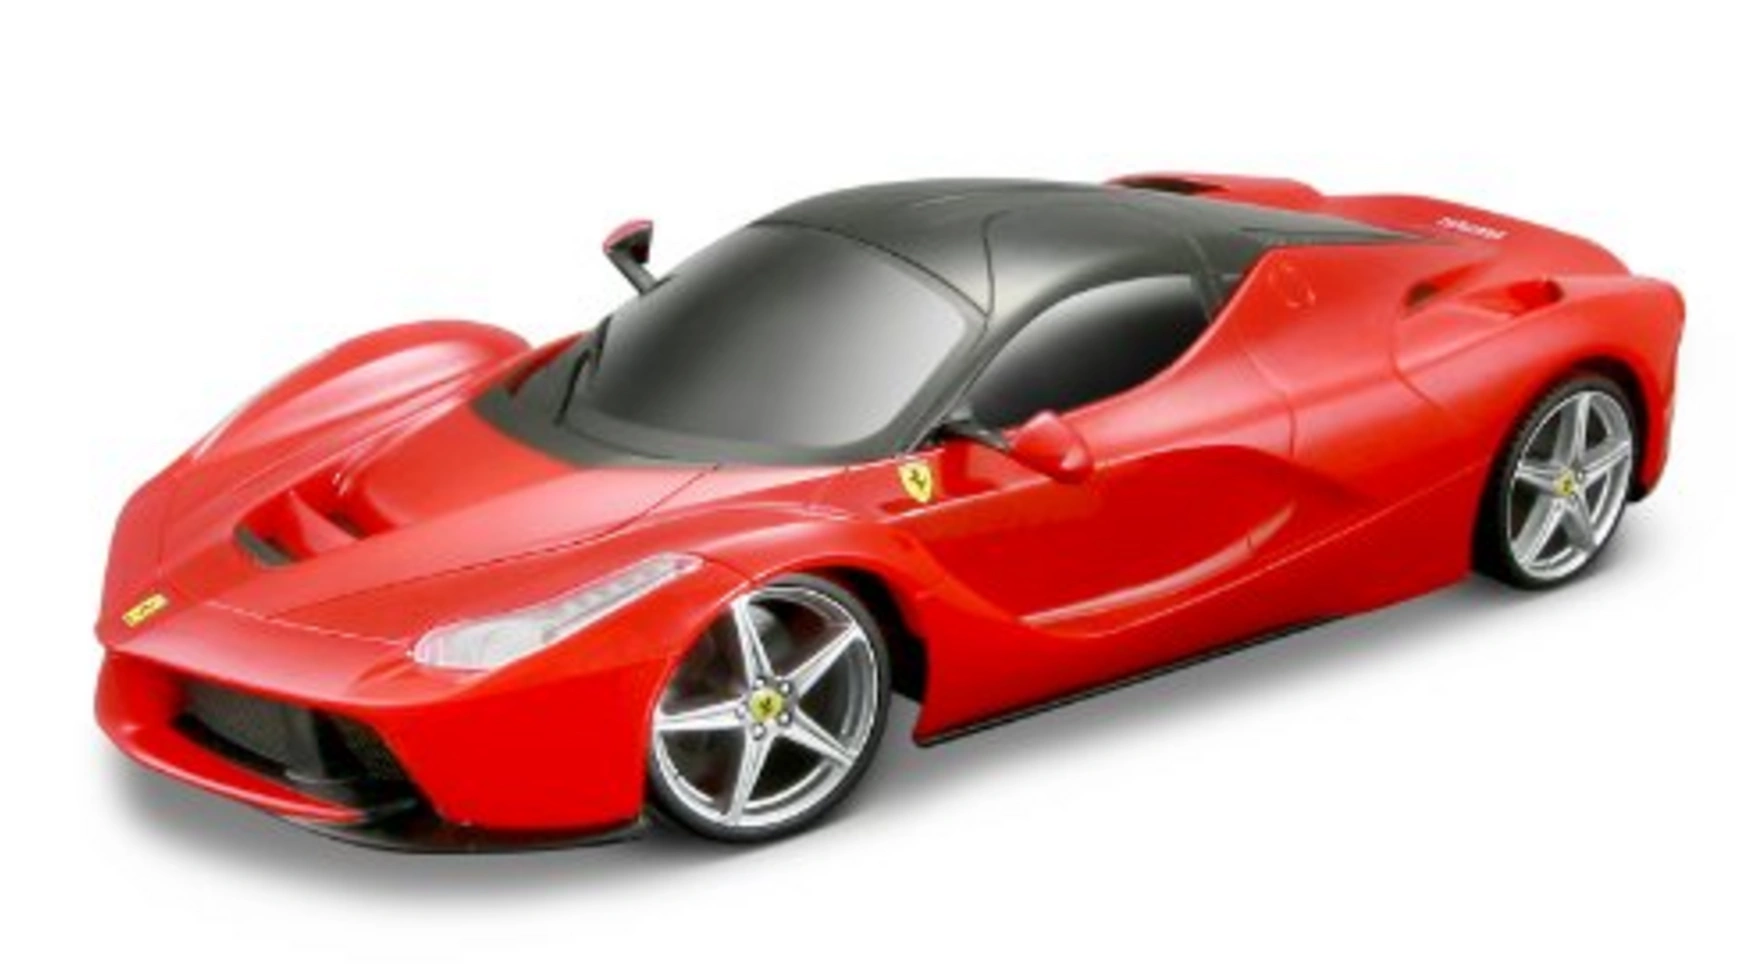 Maisto Tech Радиоуправляемый Ferrari LaFerrari 1:24 bburago 1 18 ferrari laferrari simulation alloy car model collect gifts toy